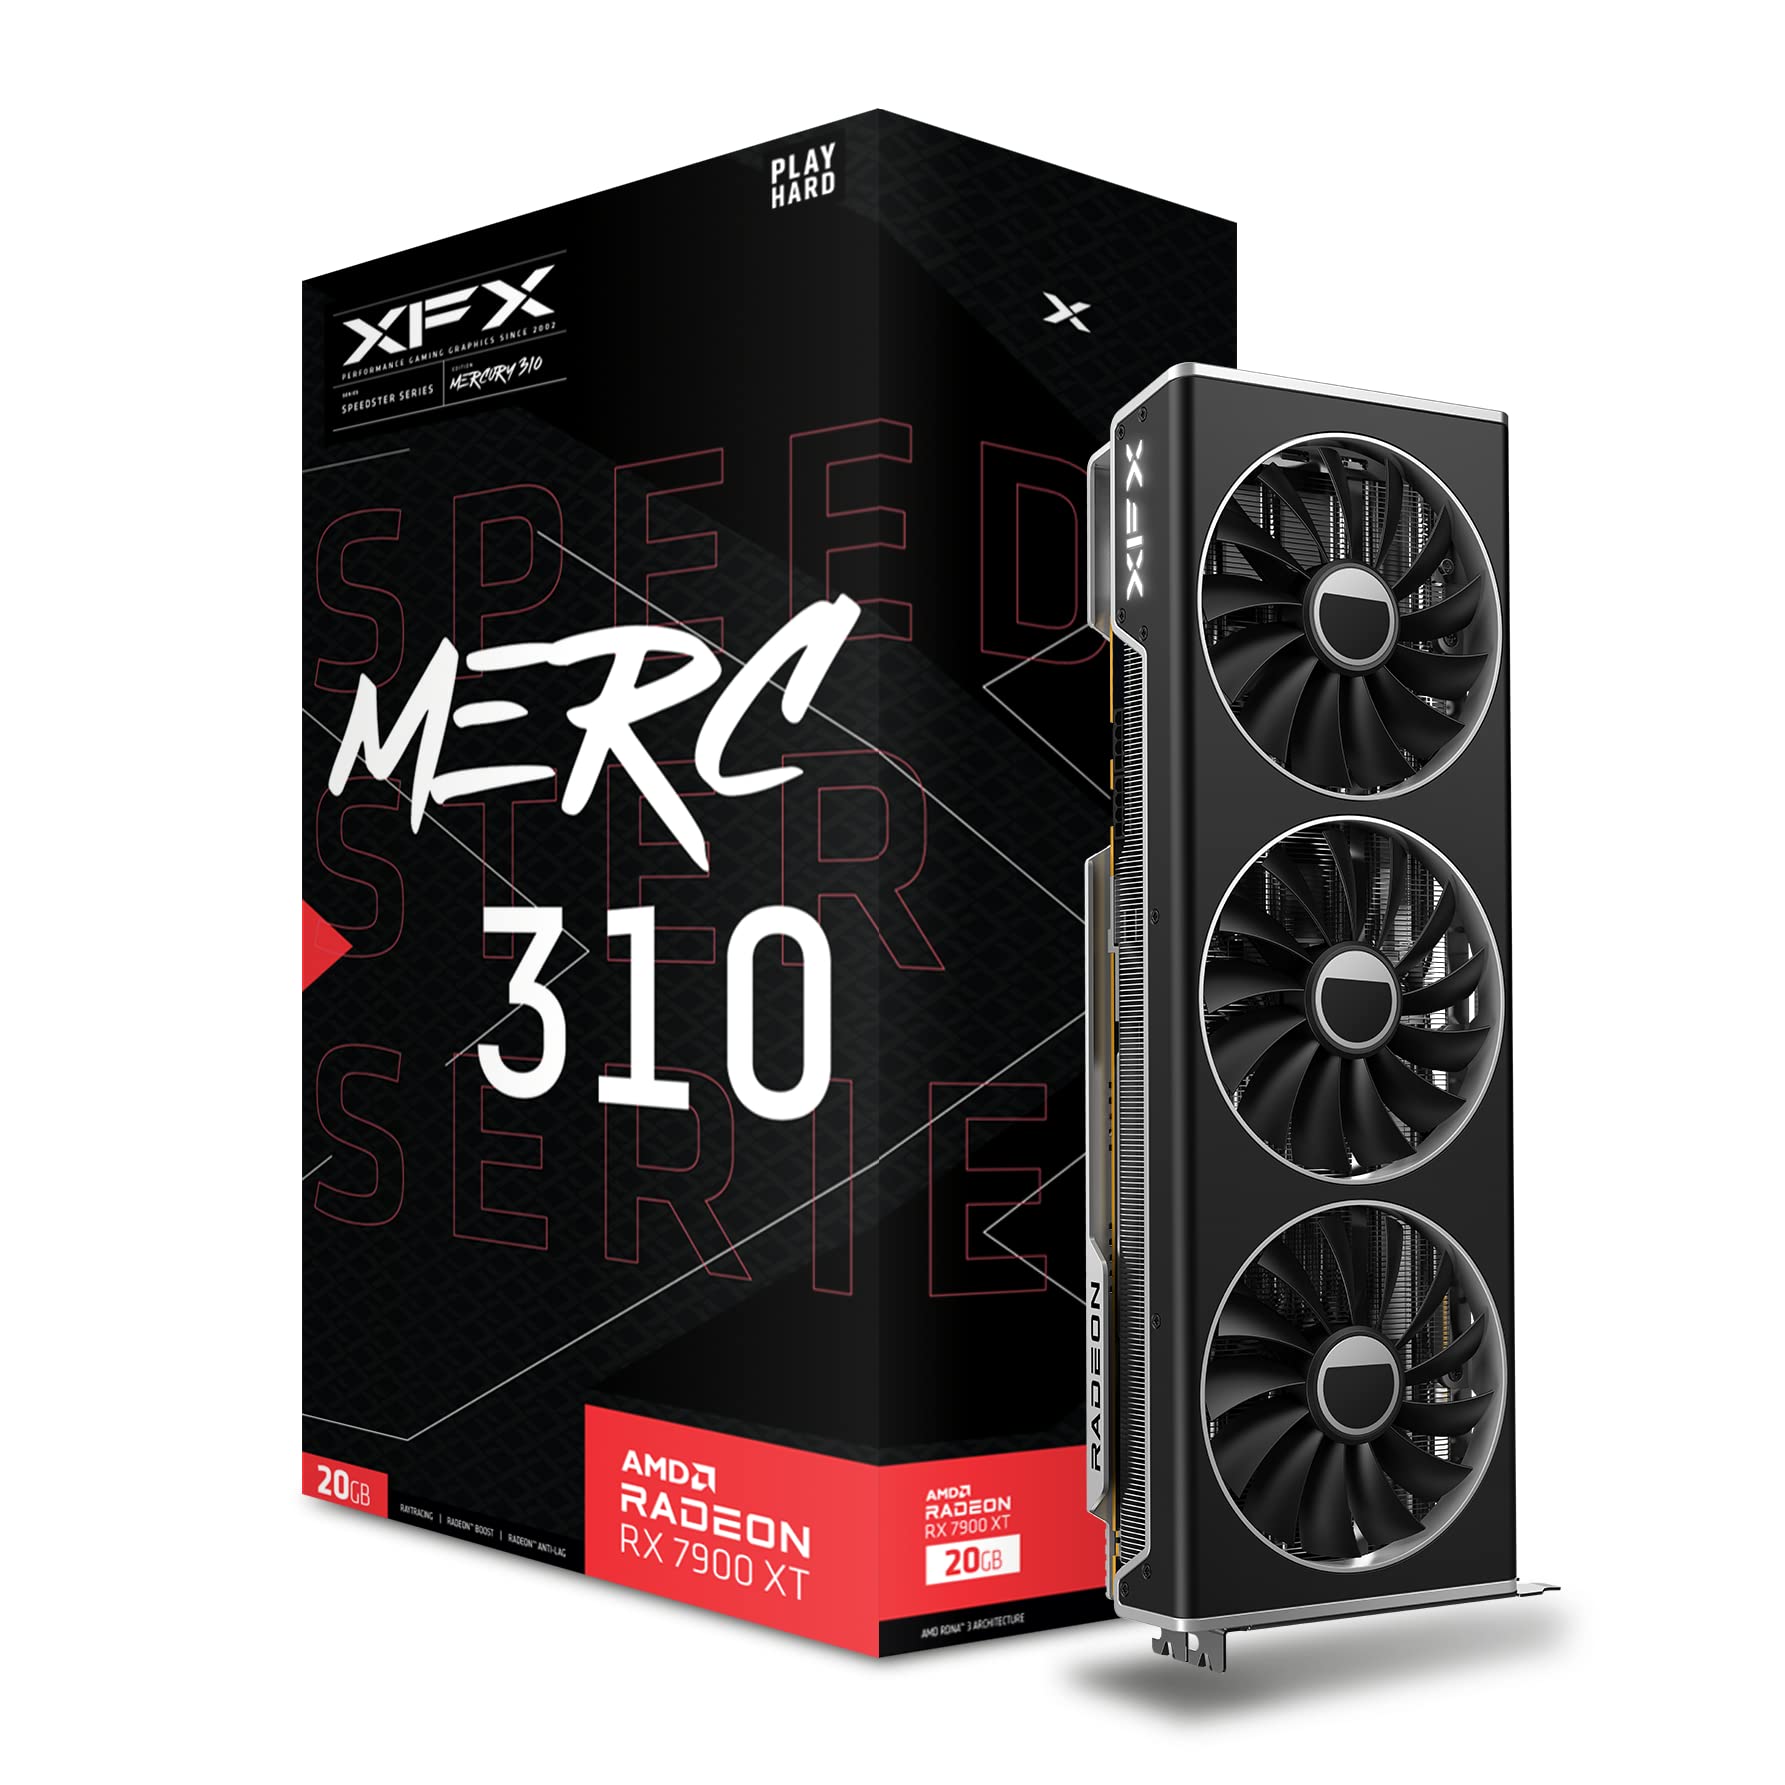 XFX Speedster Merc310 AMD Radeon RX 7900XT 20GB GDDR6 Black Gaming Graphics Card $705 + Free Shipping